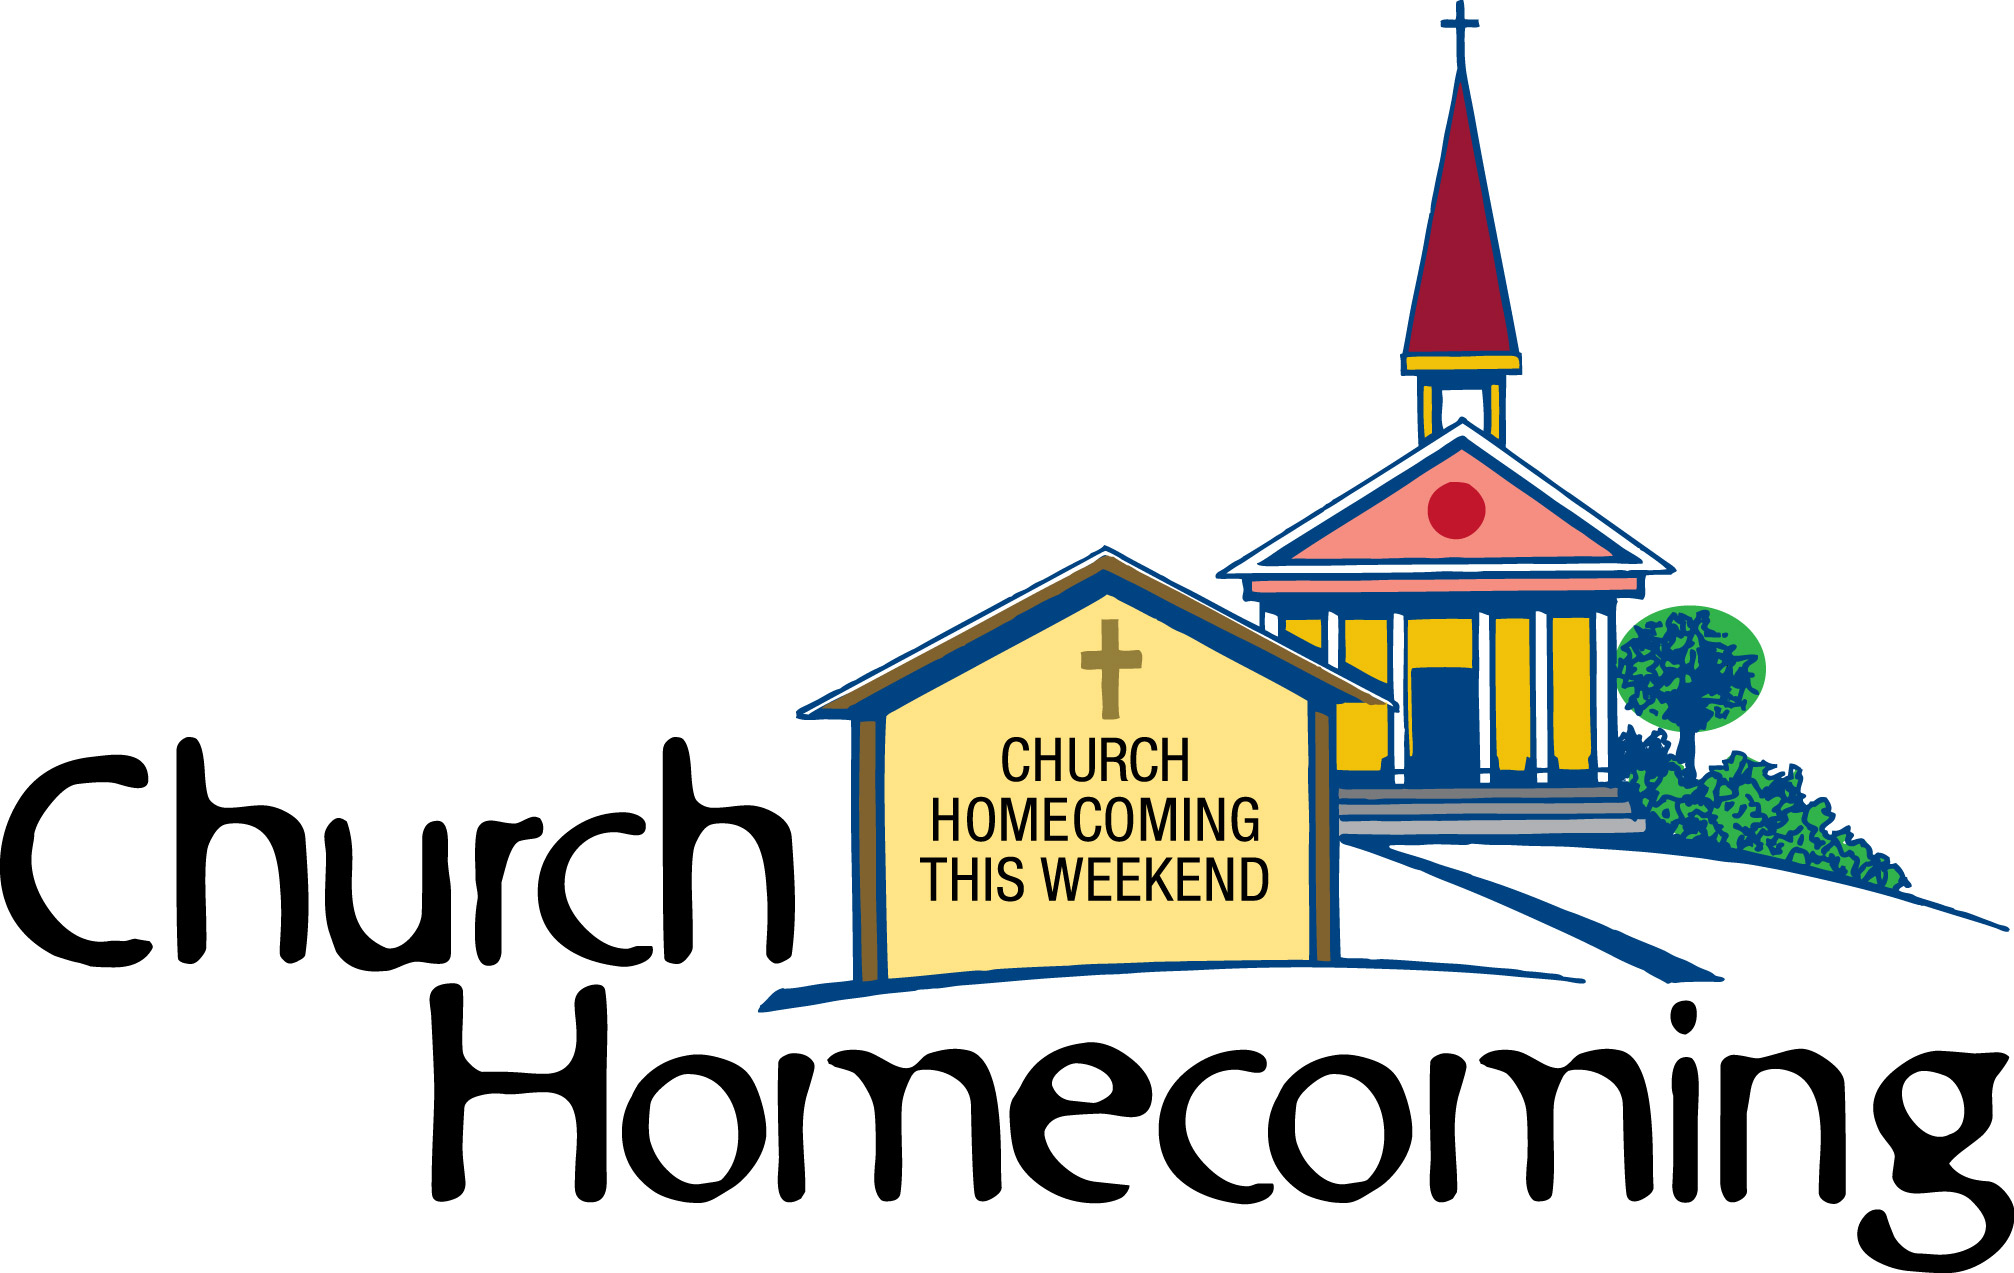 Church homecoming clipart jpg